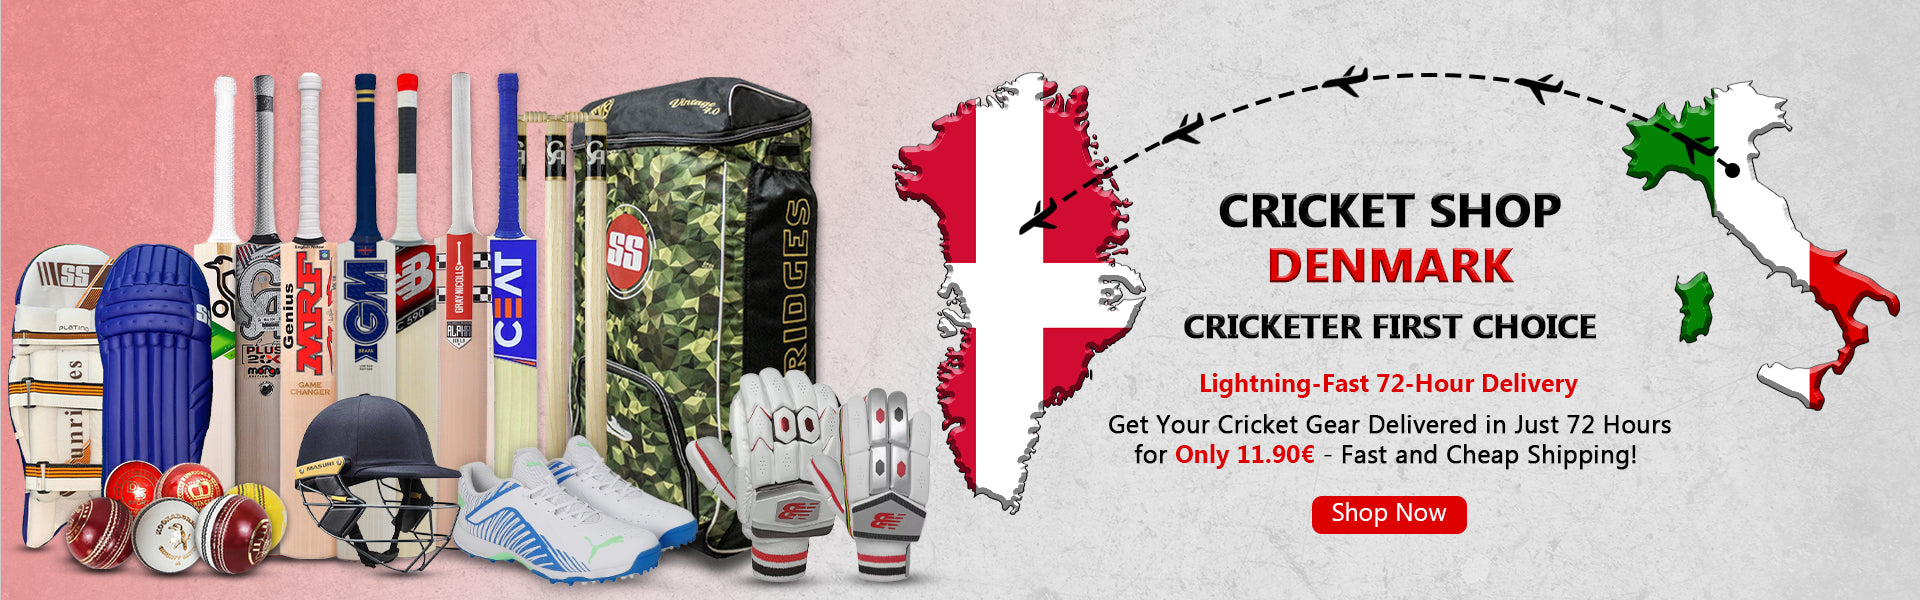 Cricket Shop Denmark | Cricketer first Choice